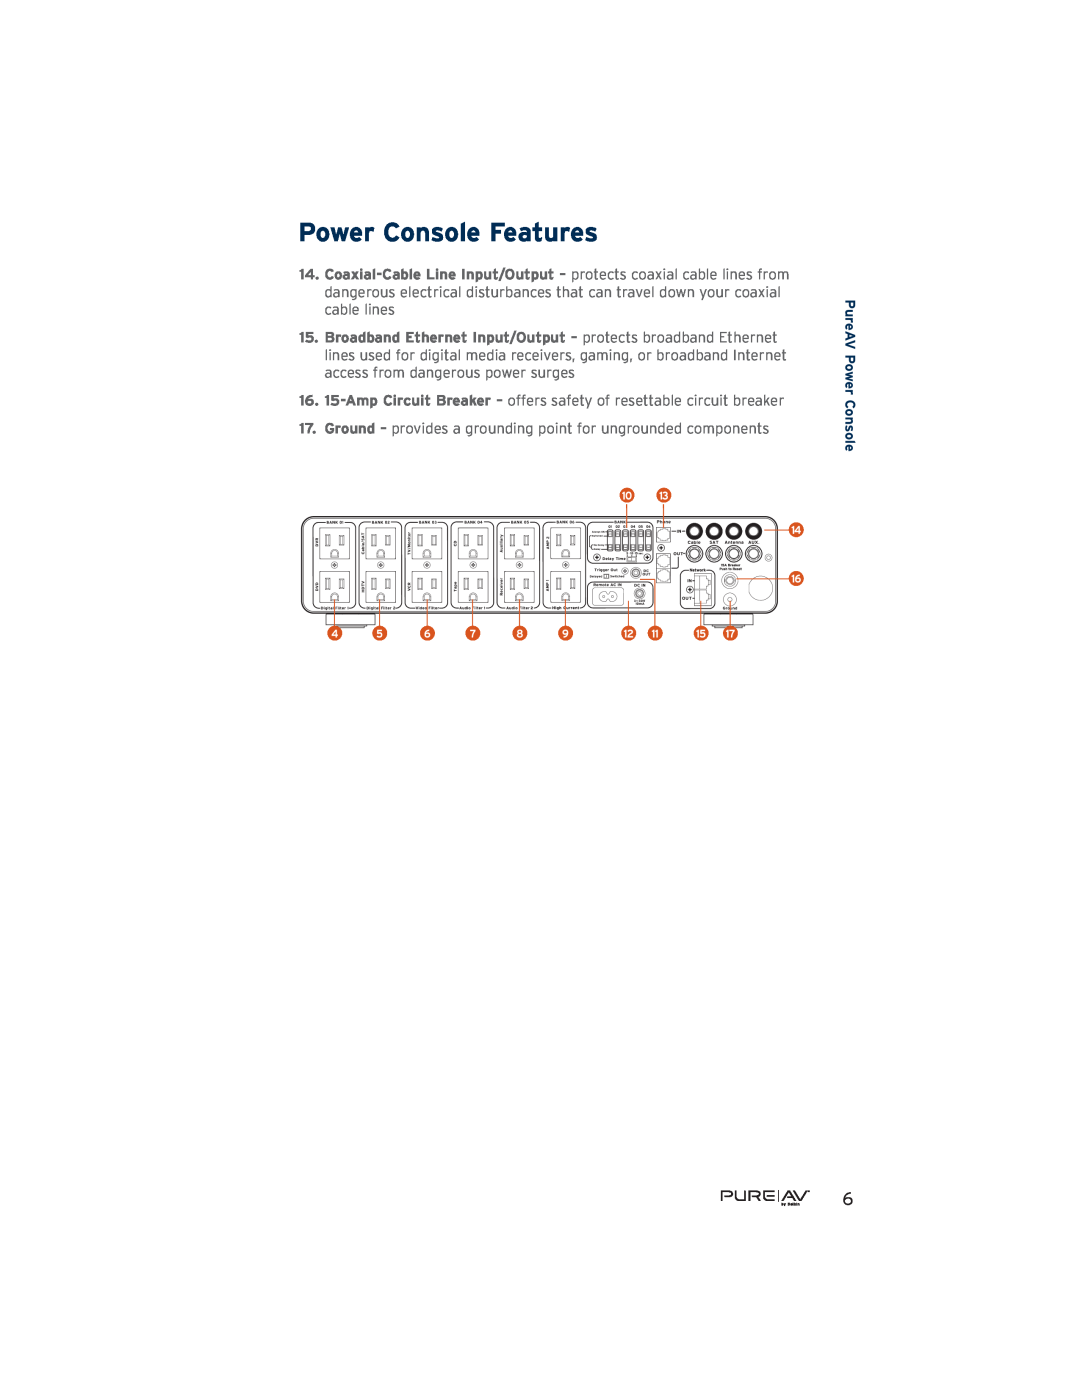 Belkin AP41300-12, PF60 user manual Power Console Features, PureAV Power Console 